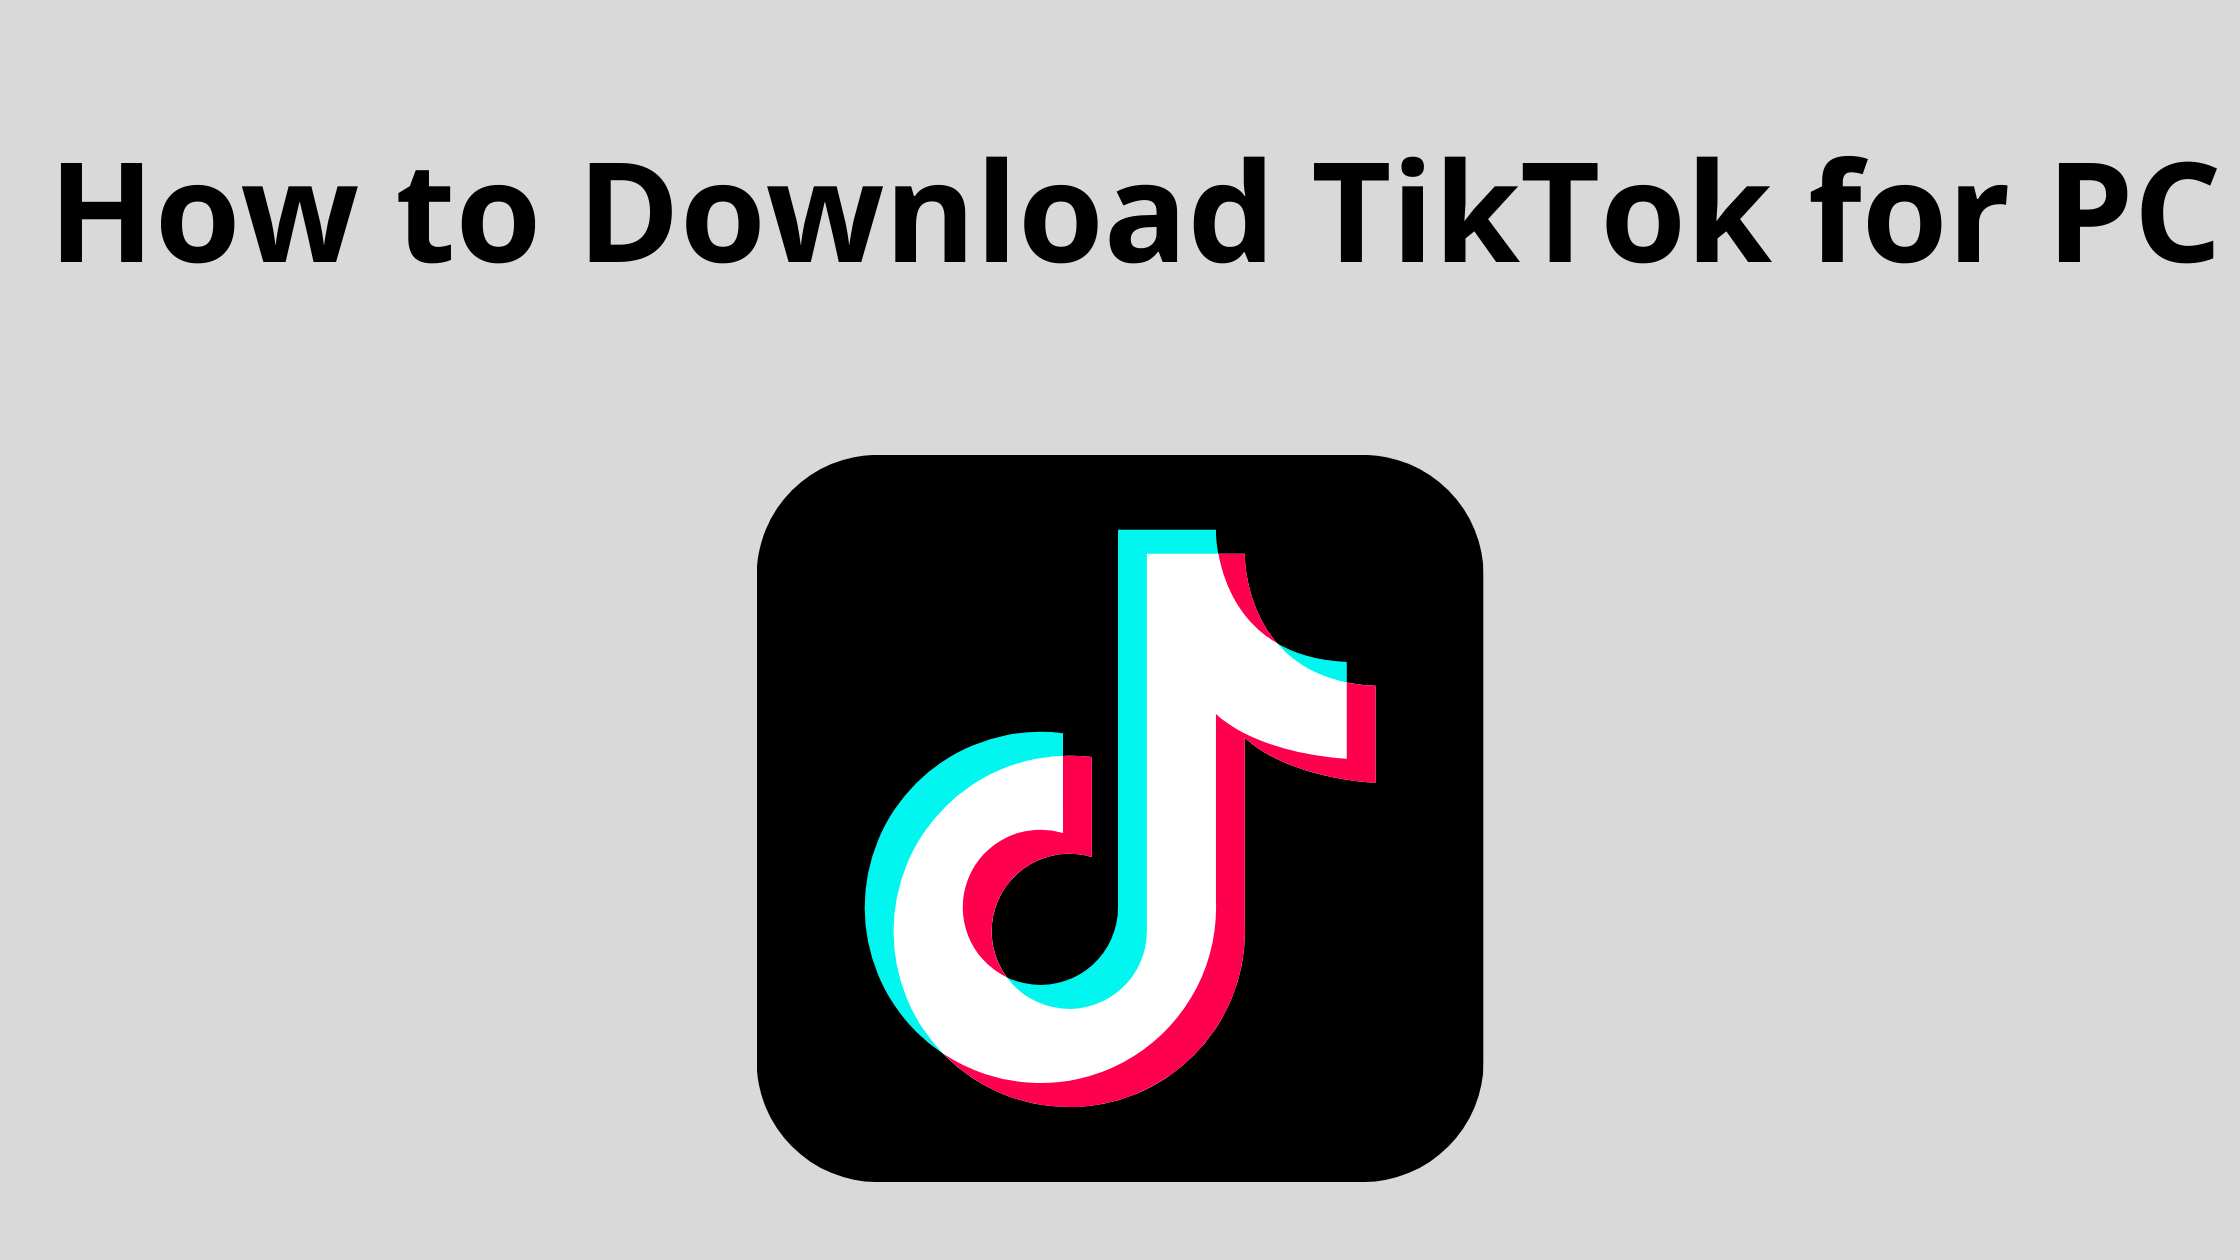 how to download blocked tiktok videos